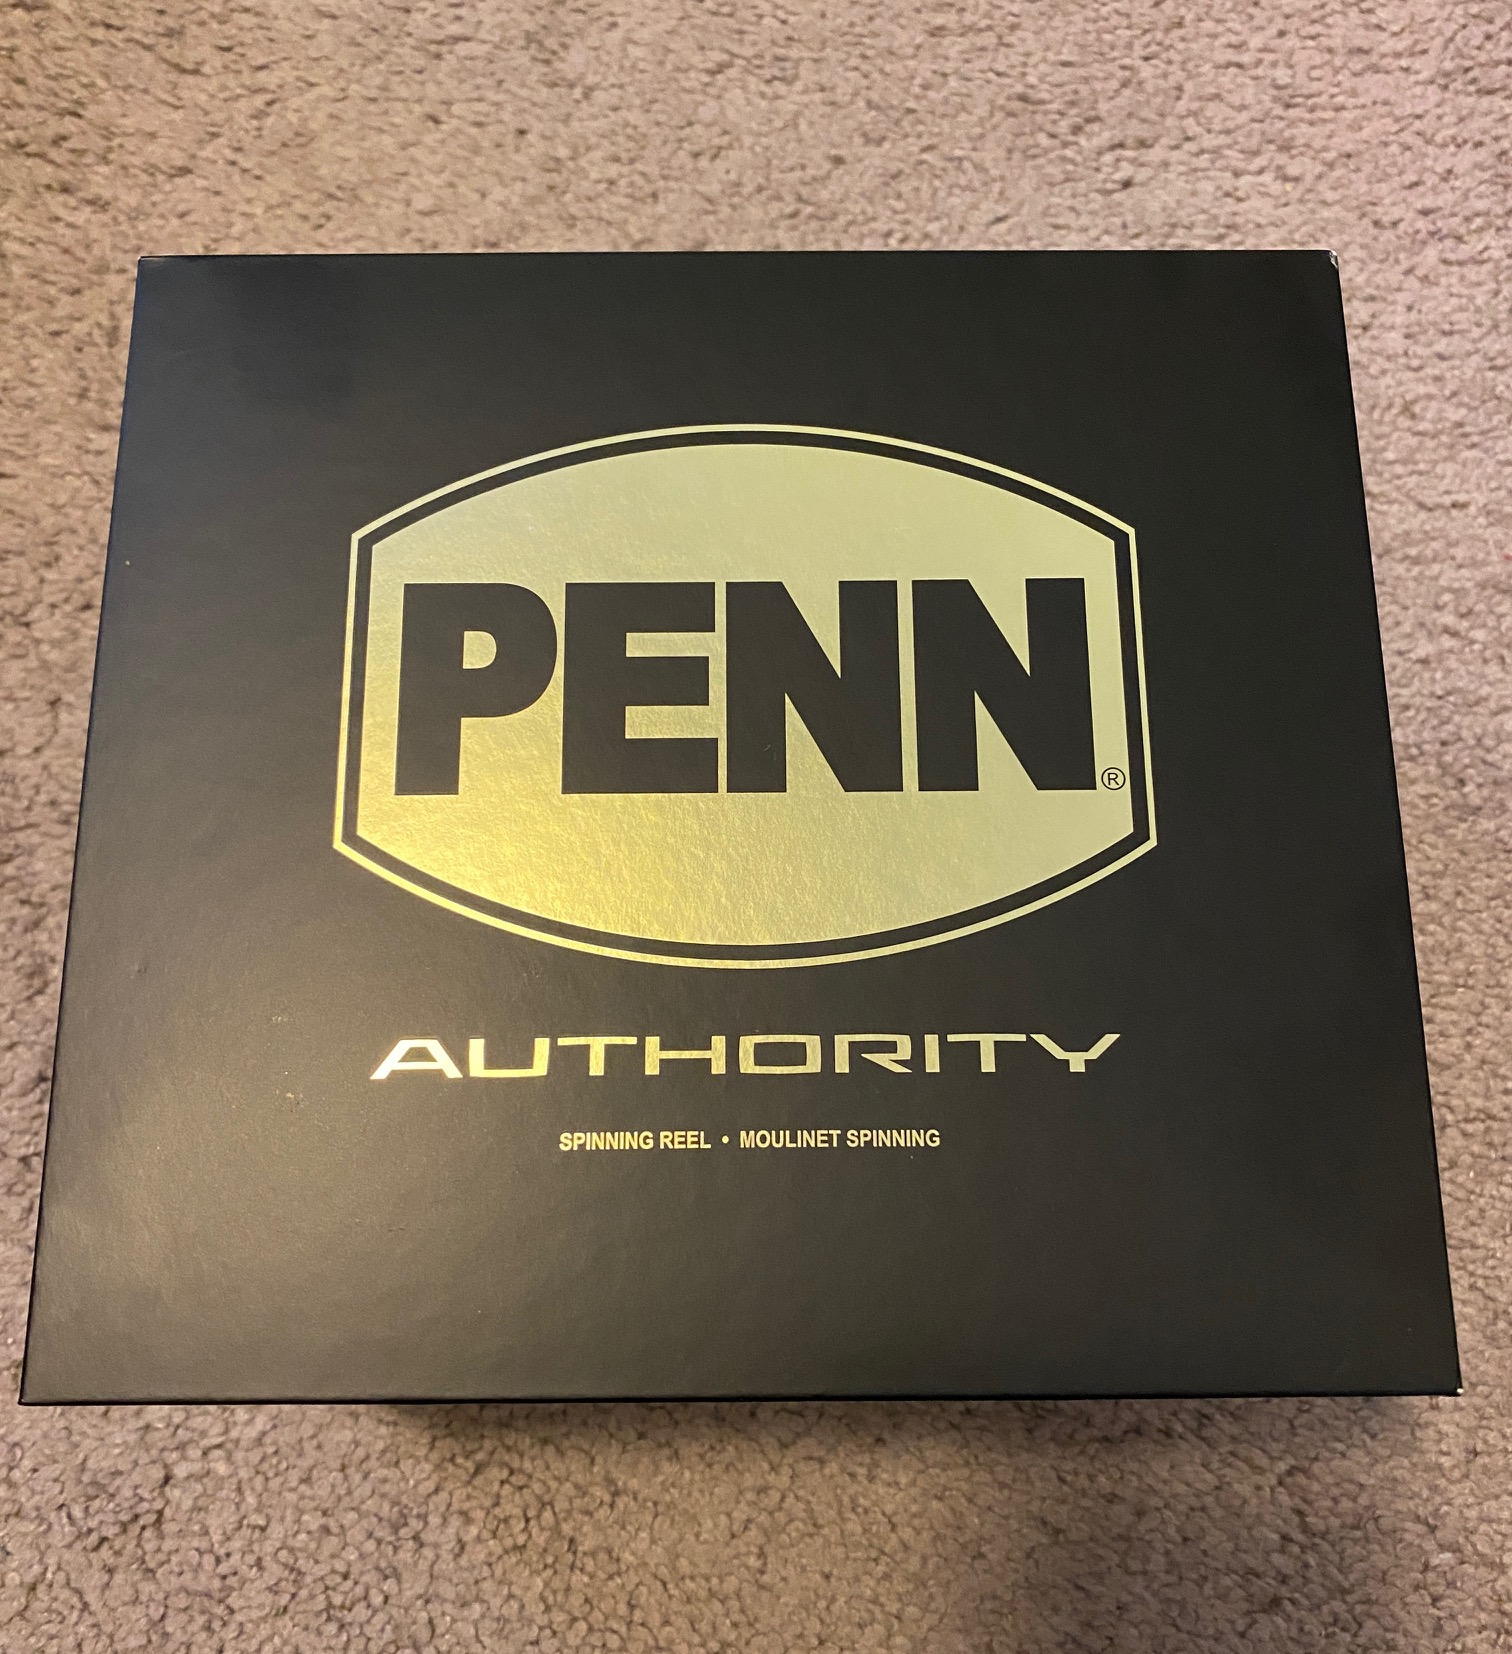 Penn Authority Spinning Reel